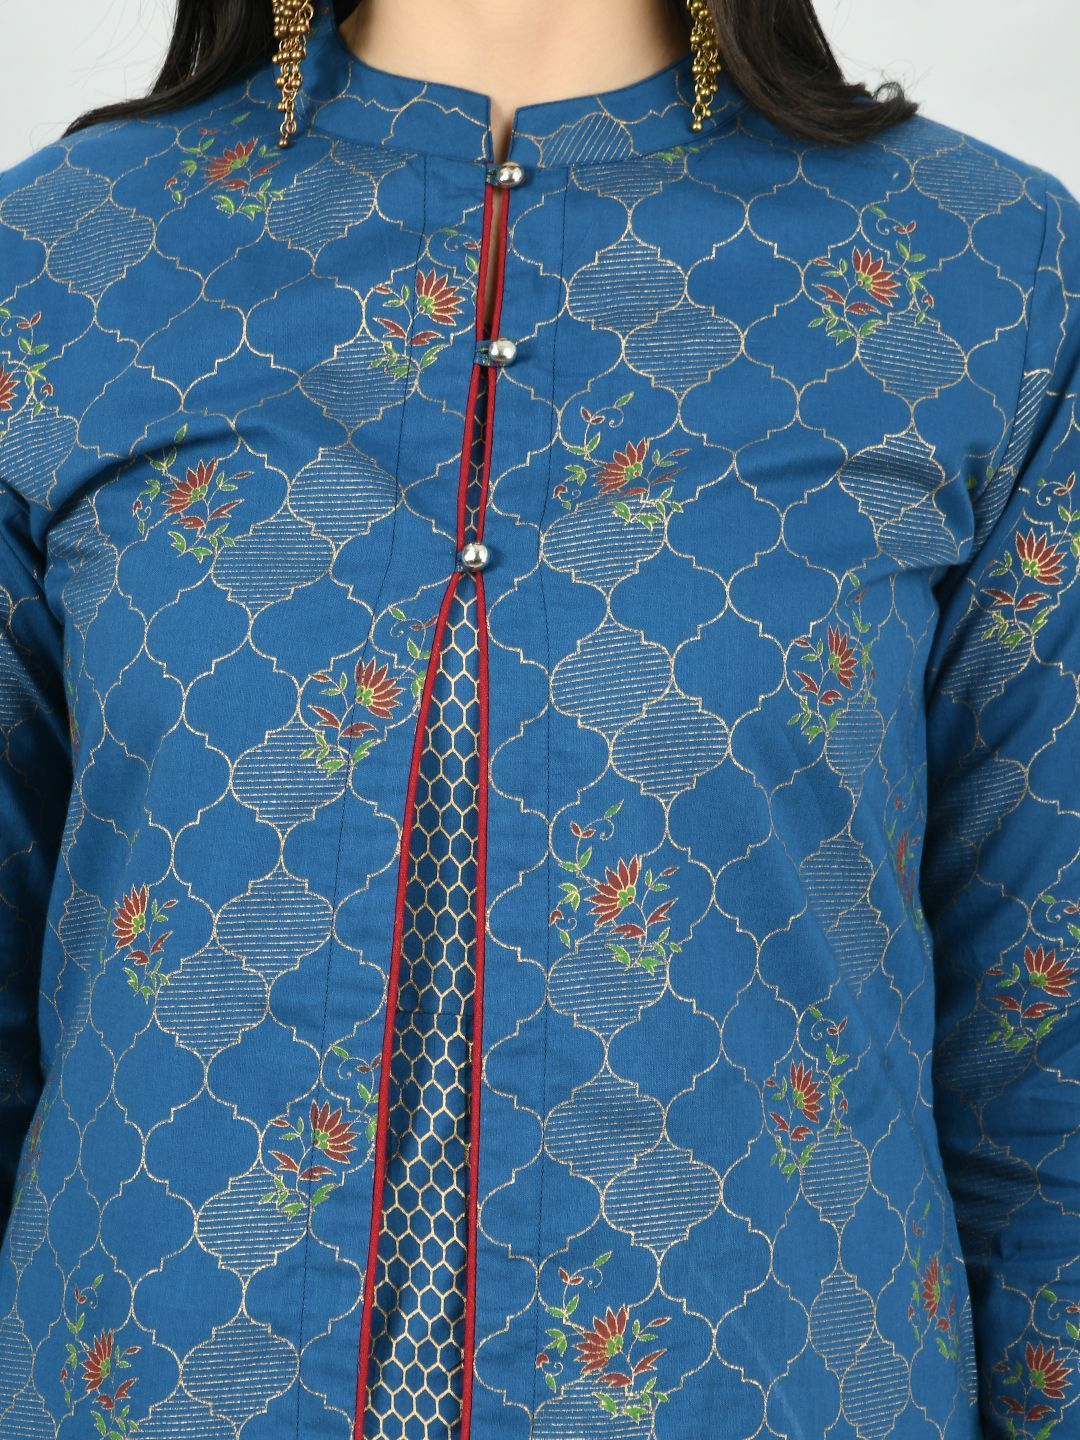 Women's Blue Cotton Printed Full Sleeve Mandarin Neck Casual Kurta Jacket Set - Myshka